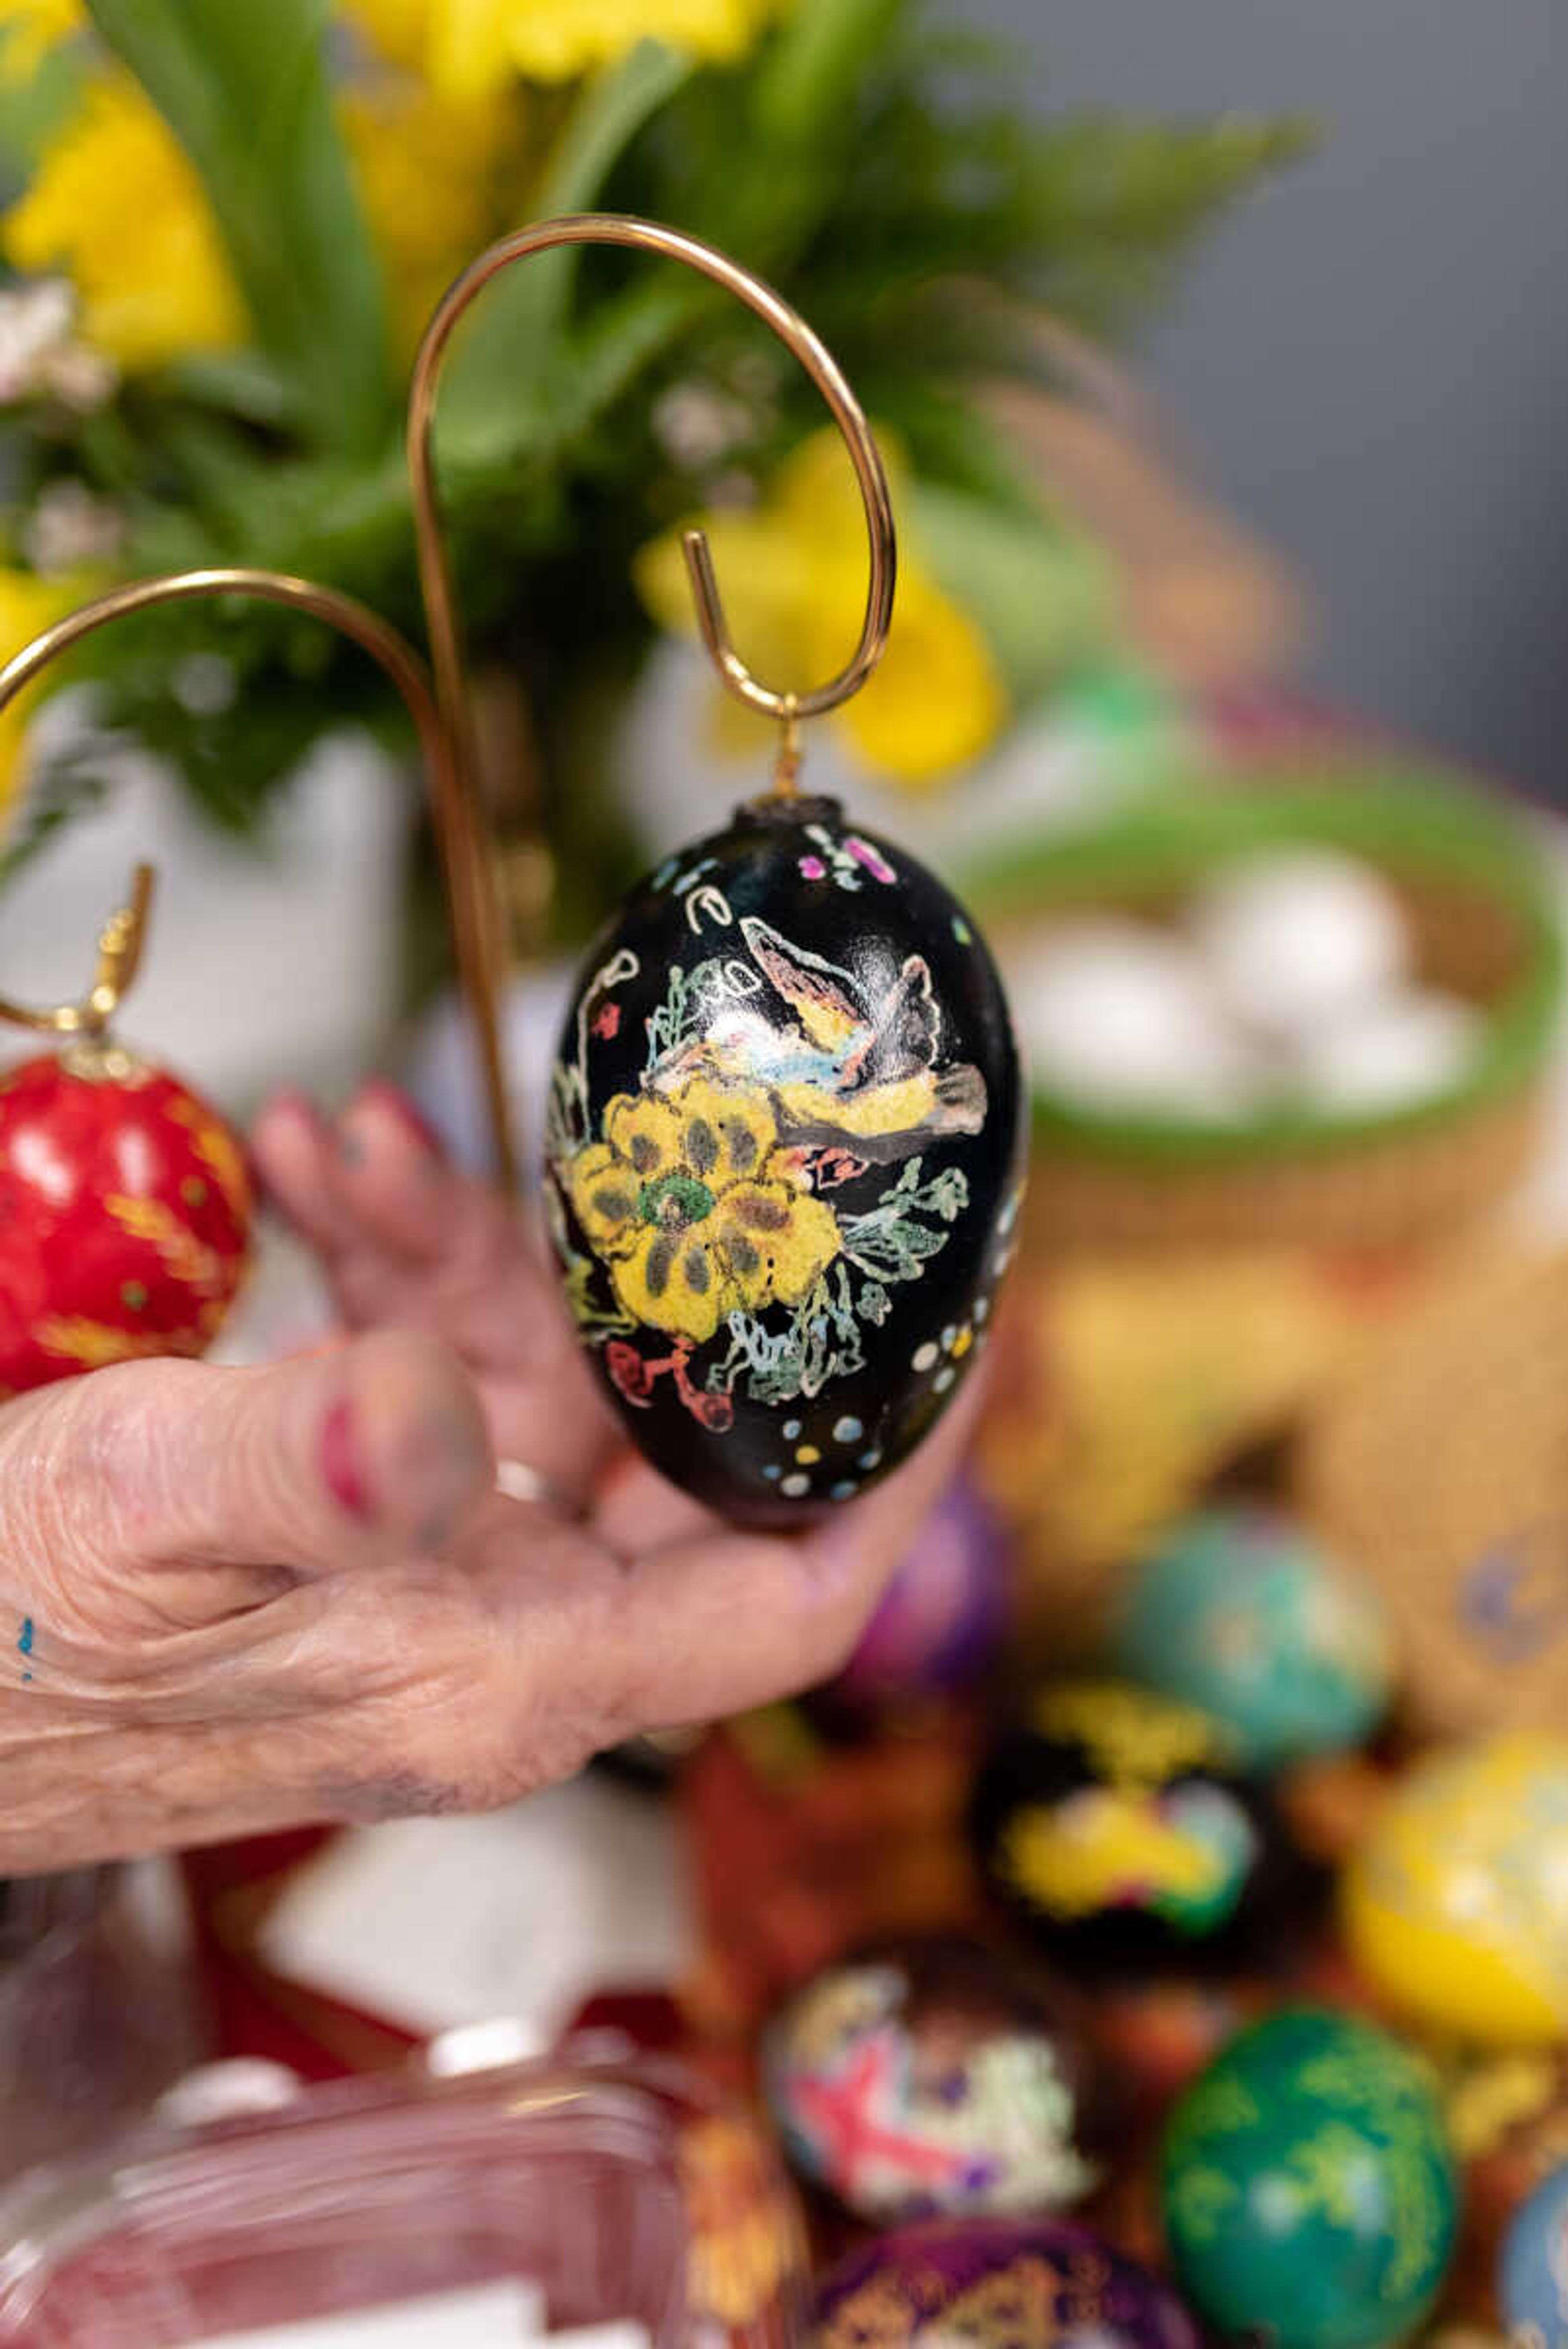 Barb Duncan teaches a Pysanky Ukrainian egg decorating class on March 24.